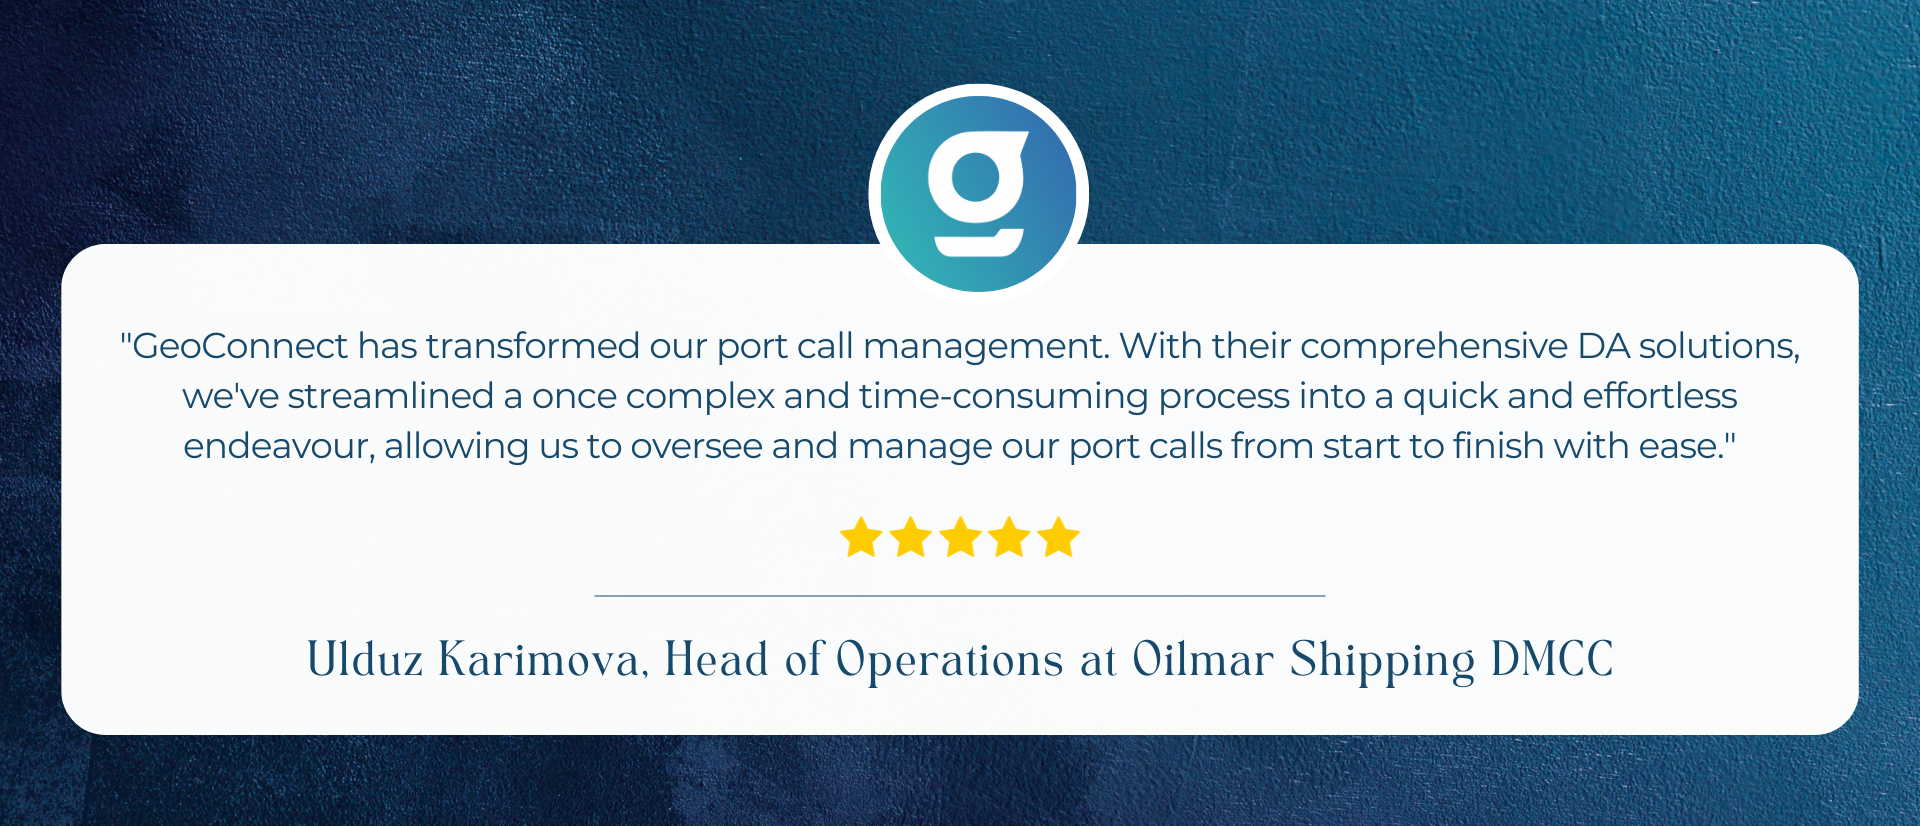 Testimony from Ulduz Karimova, Head of Operations at Oilmar Shipping DMCC